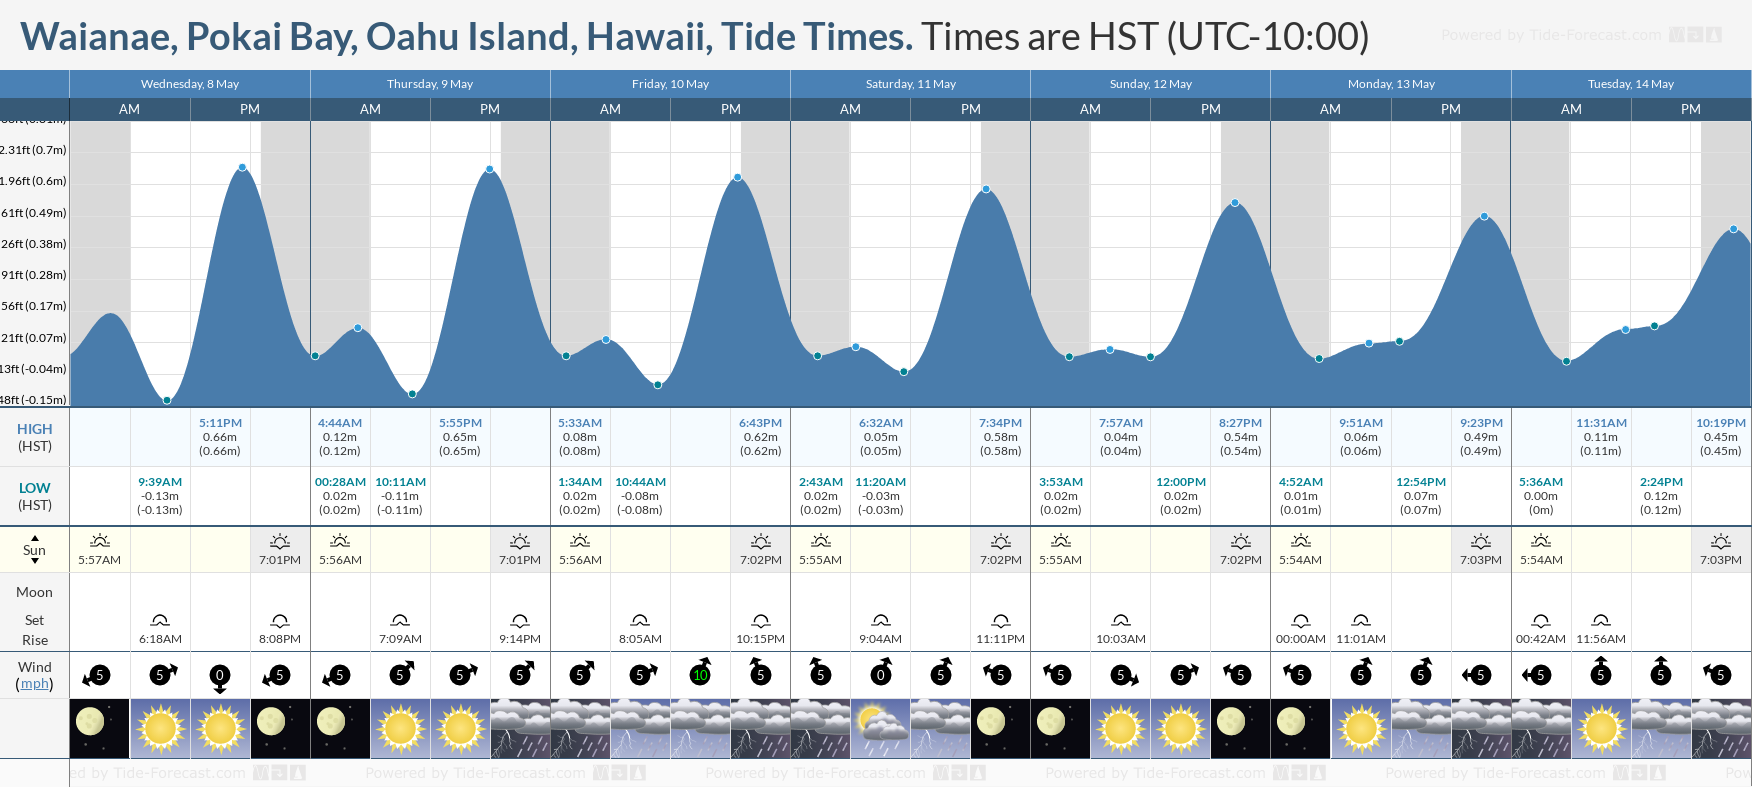 Waianae, Pokai Bay, Oahu Island, Hawaii Tide Chart including high and low tide tide times for the next 7 days